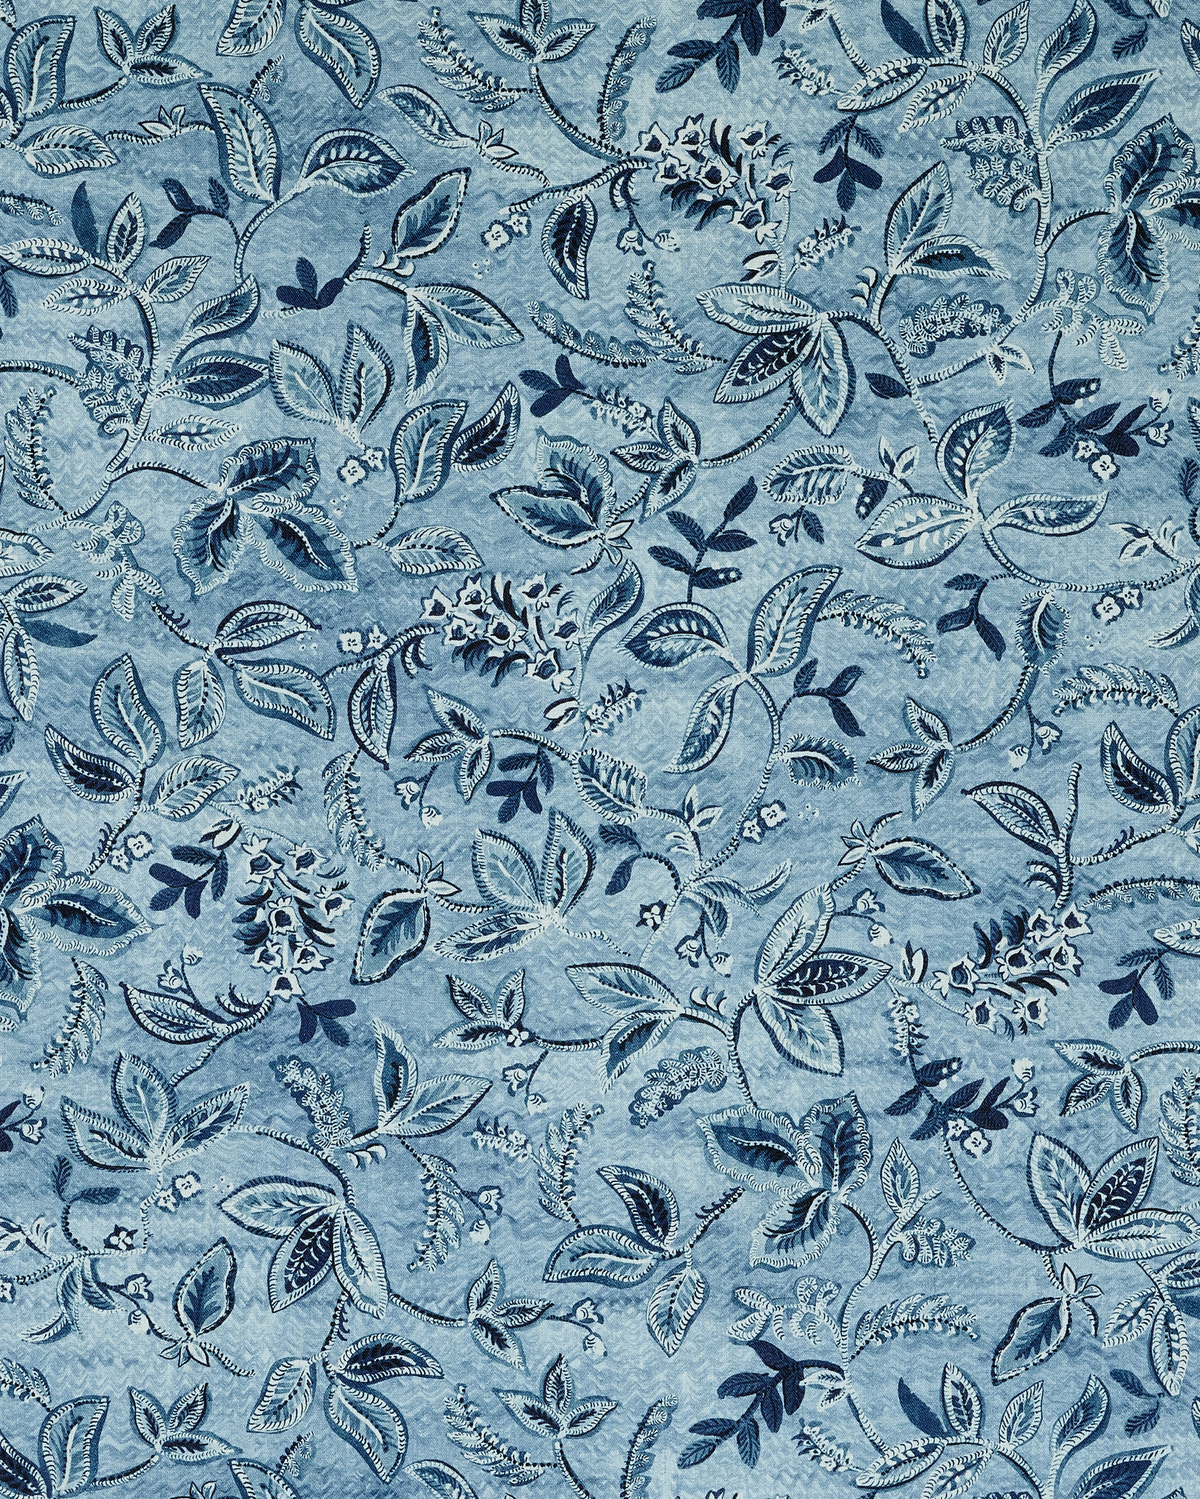 Textured Botanical Fabric in Dark Blues